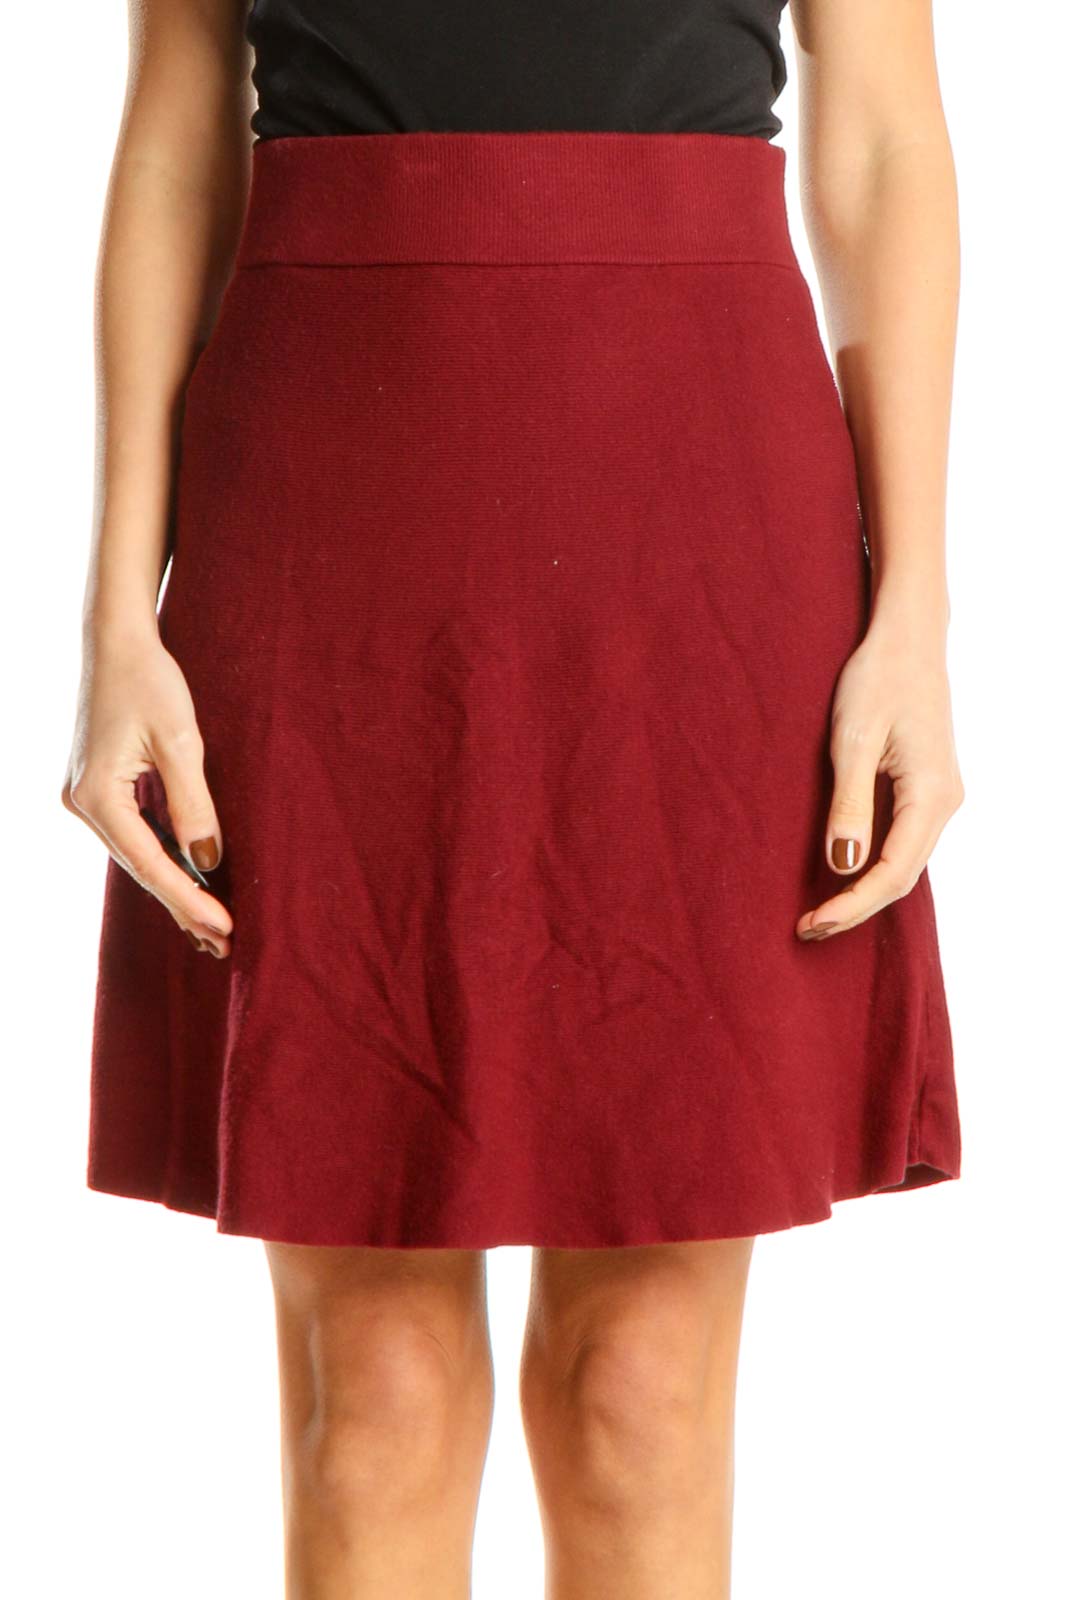 Red Brunch A-Line Skirt Front